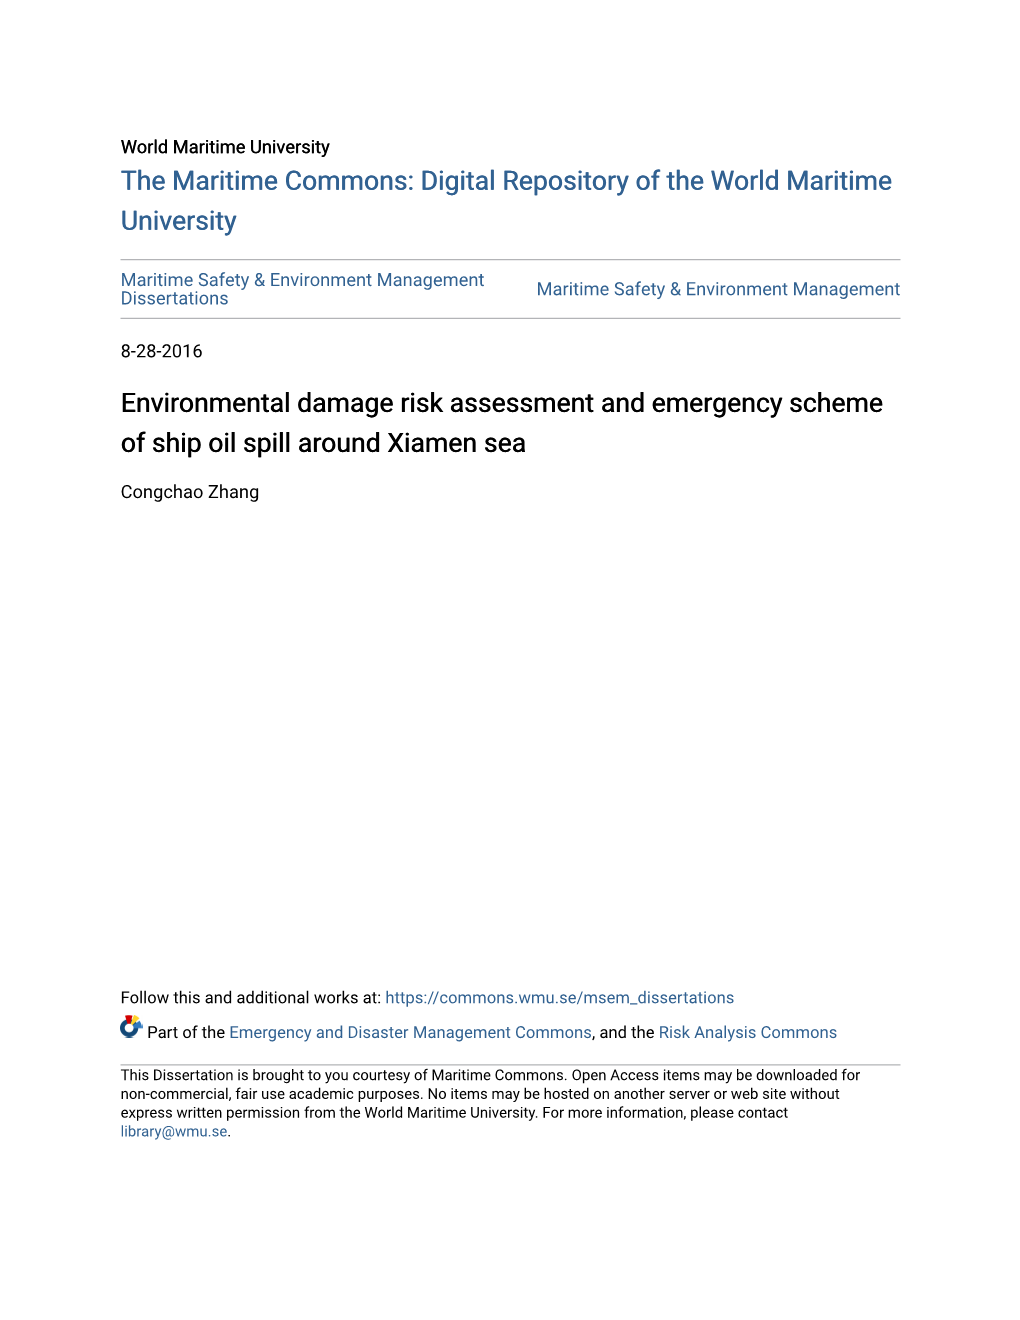 Environmental Damage Risk Assessment and Emergency Scheme of Ship Oil Spill Around Xiamen Sea